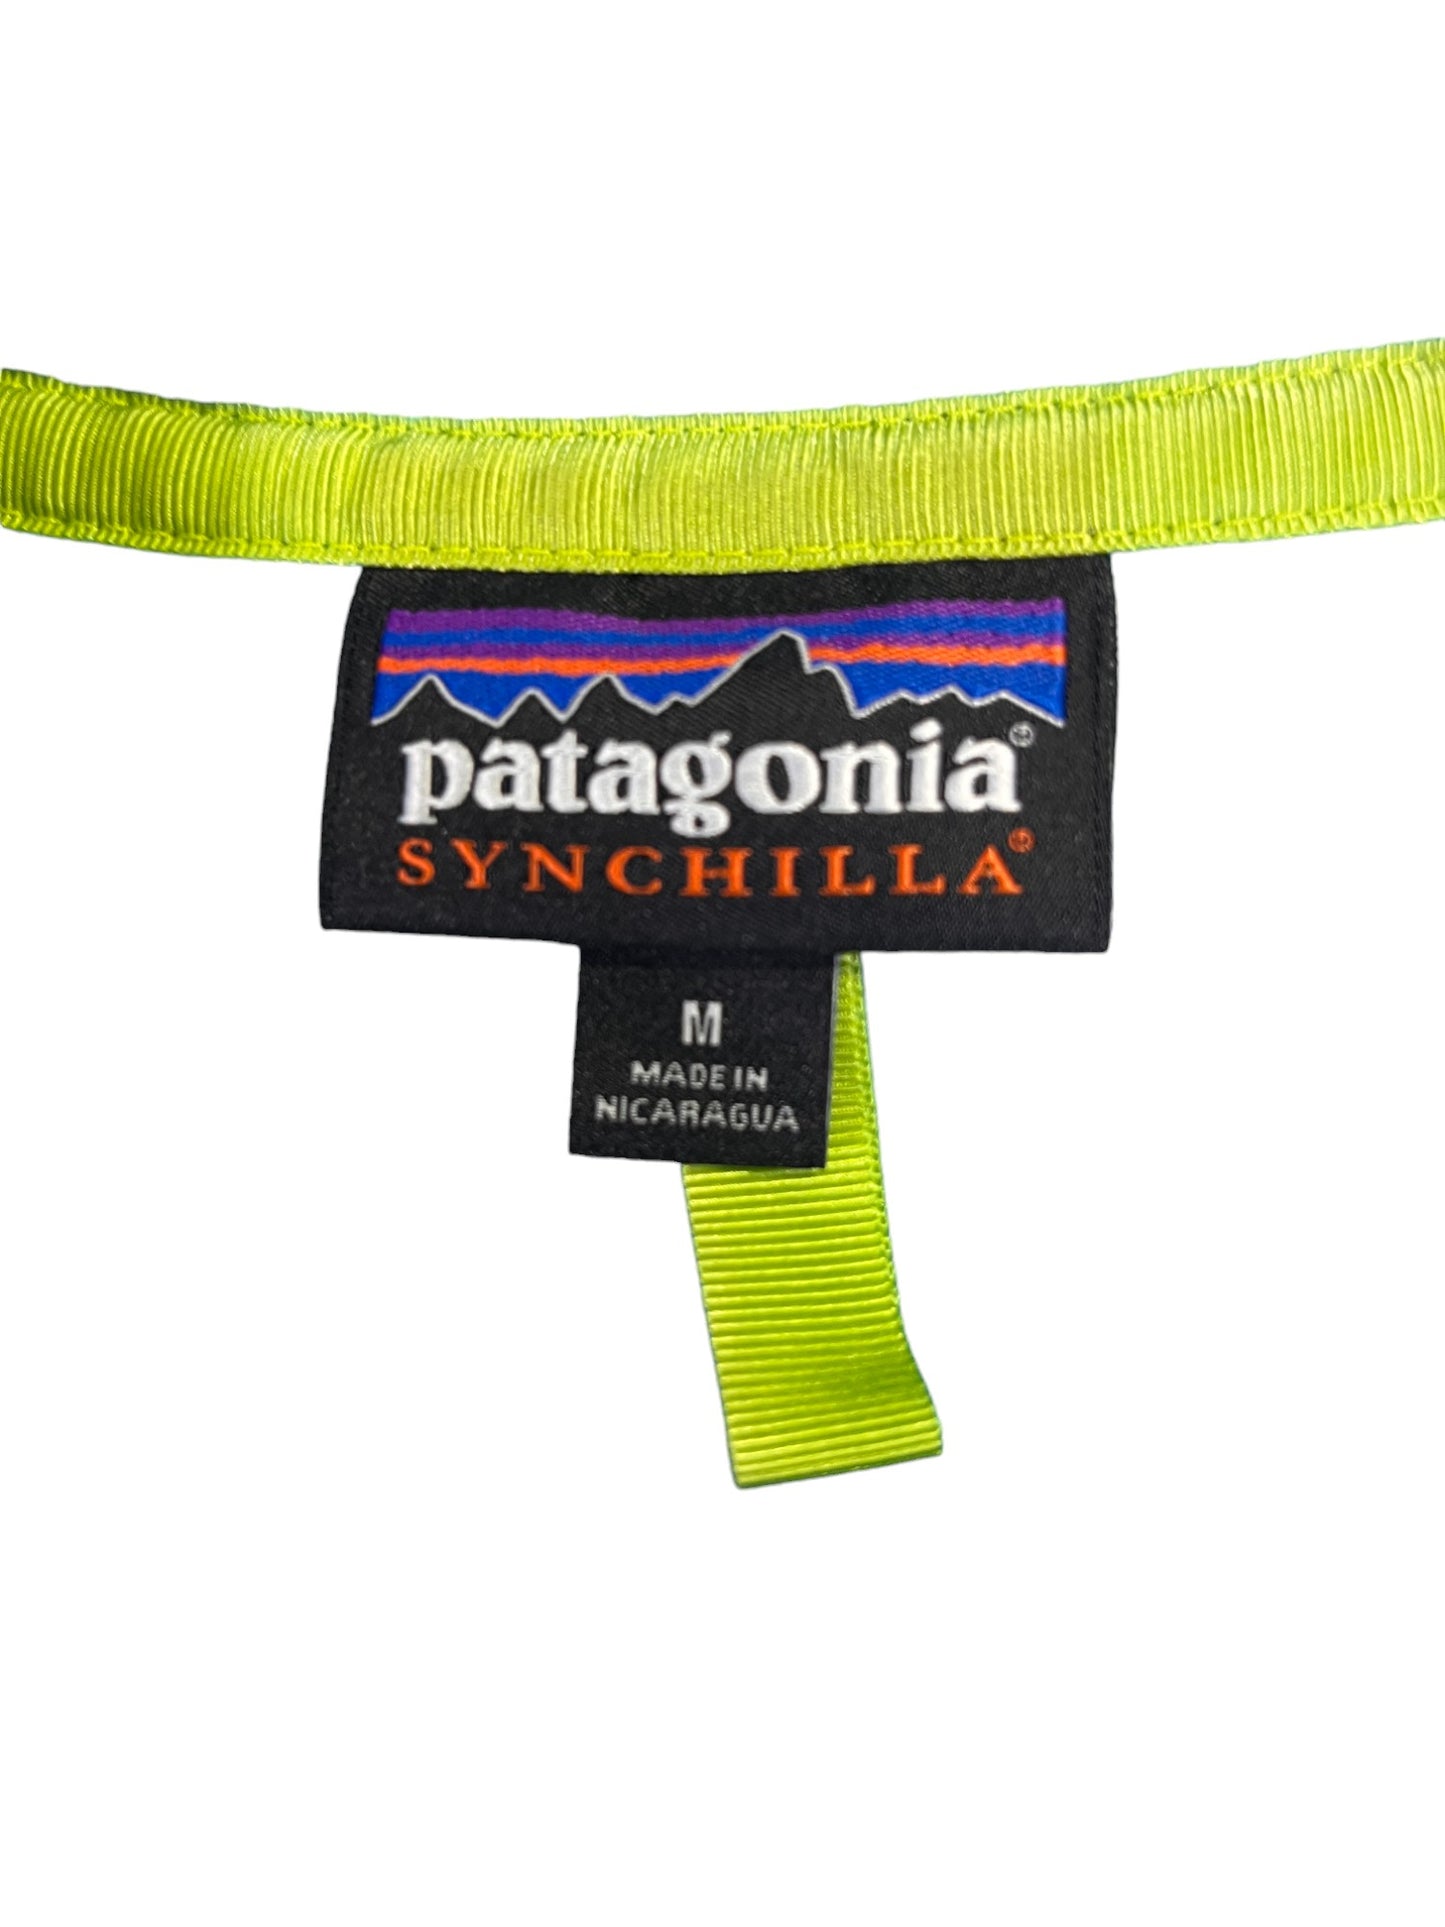 Vintage Patagonia Blue Snap-T Synchilla Fleece Sweater Size Medium